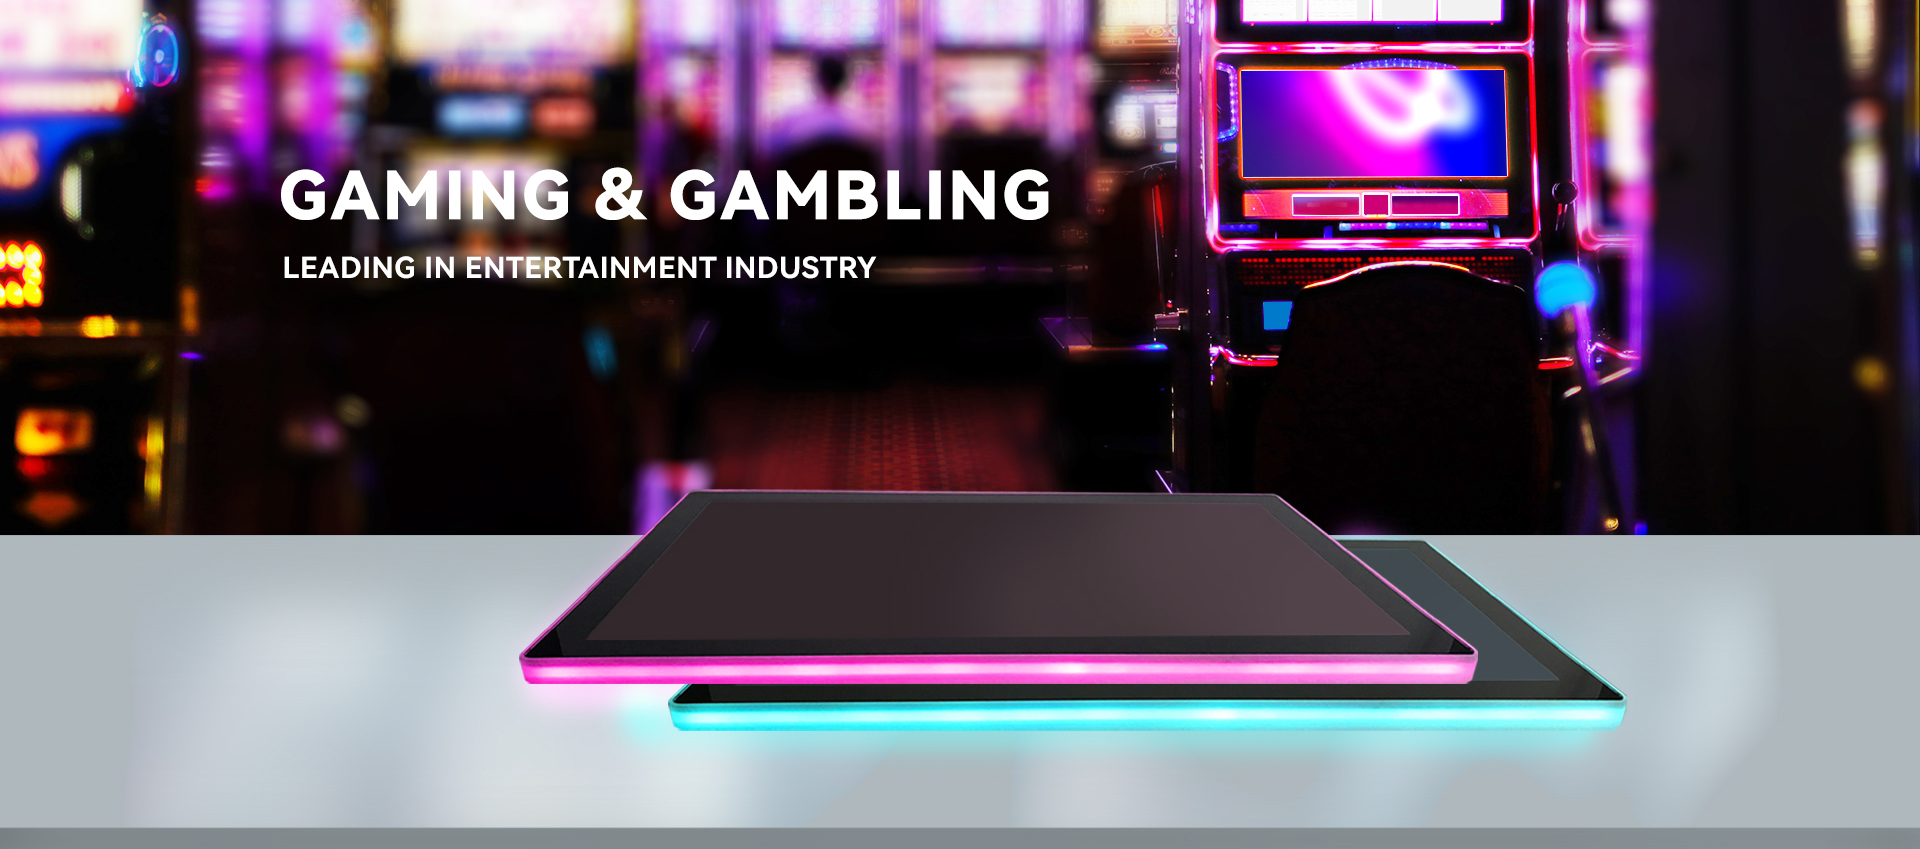 solution-Gaming-&-Gambling_02